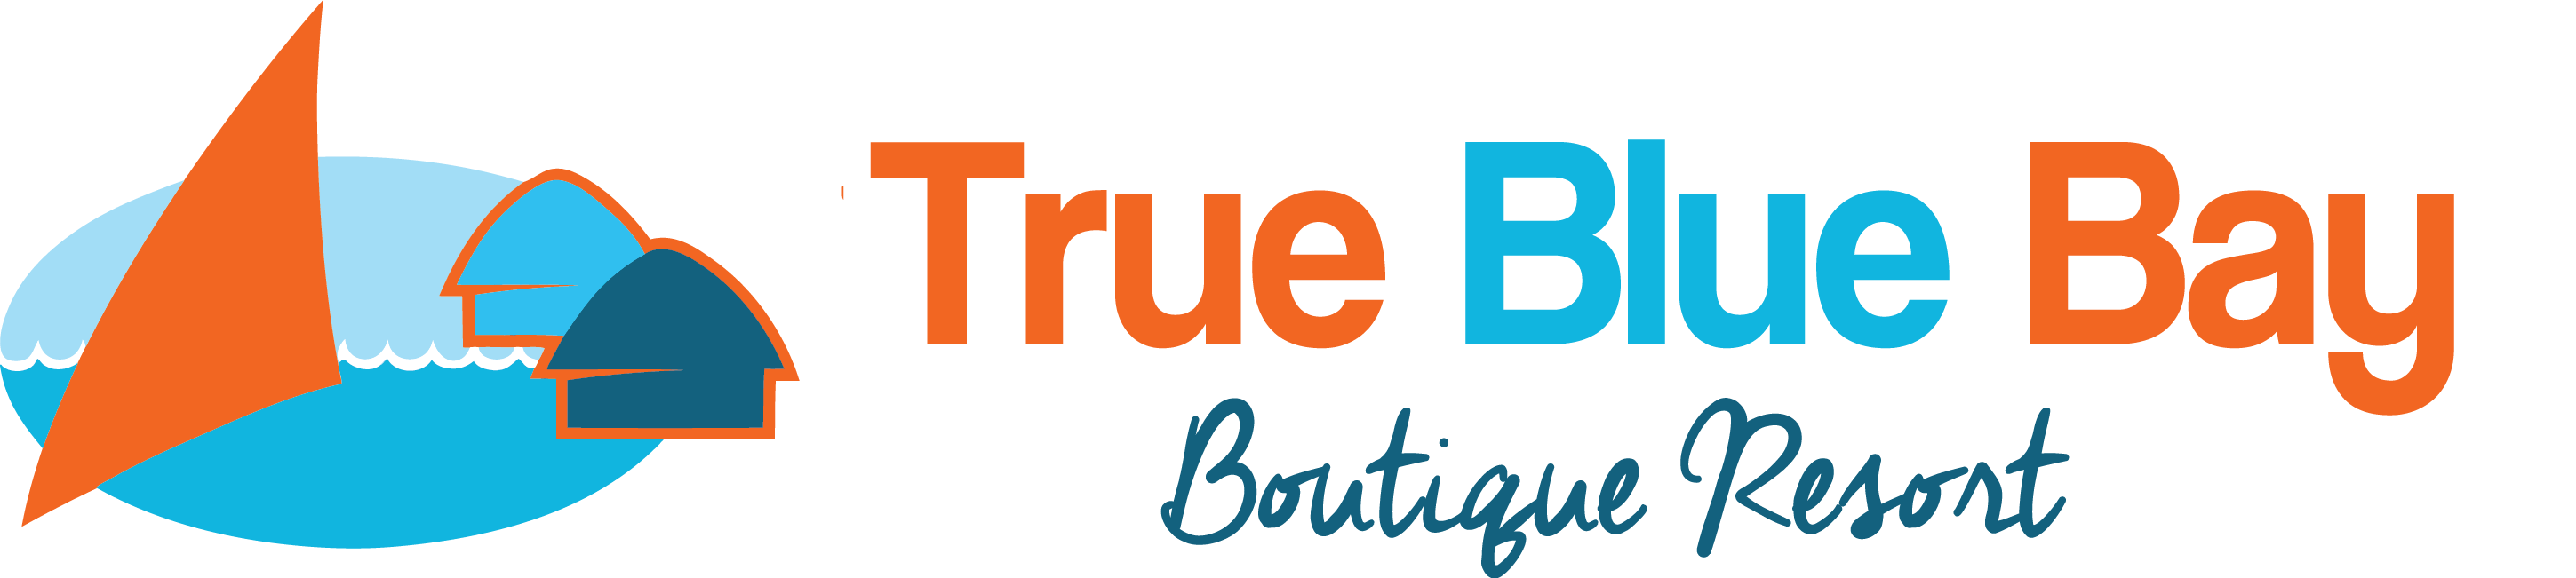 True Blue Logo - Grenada Boutique Resort Blue Bay Boutique Resort